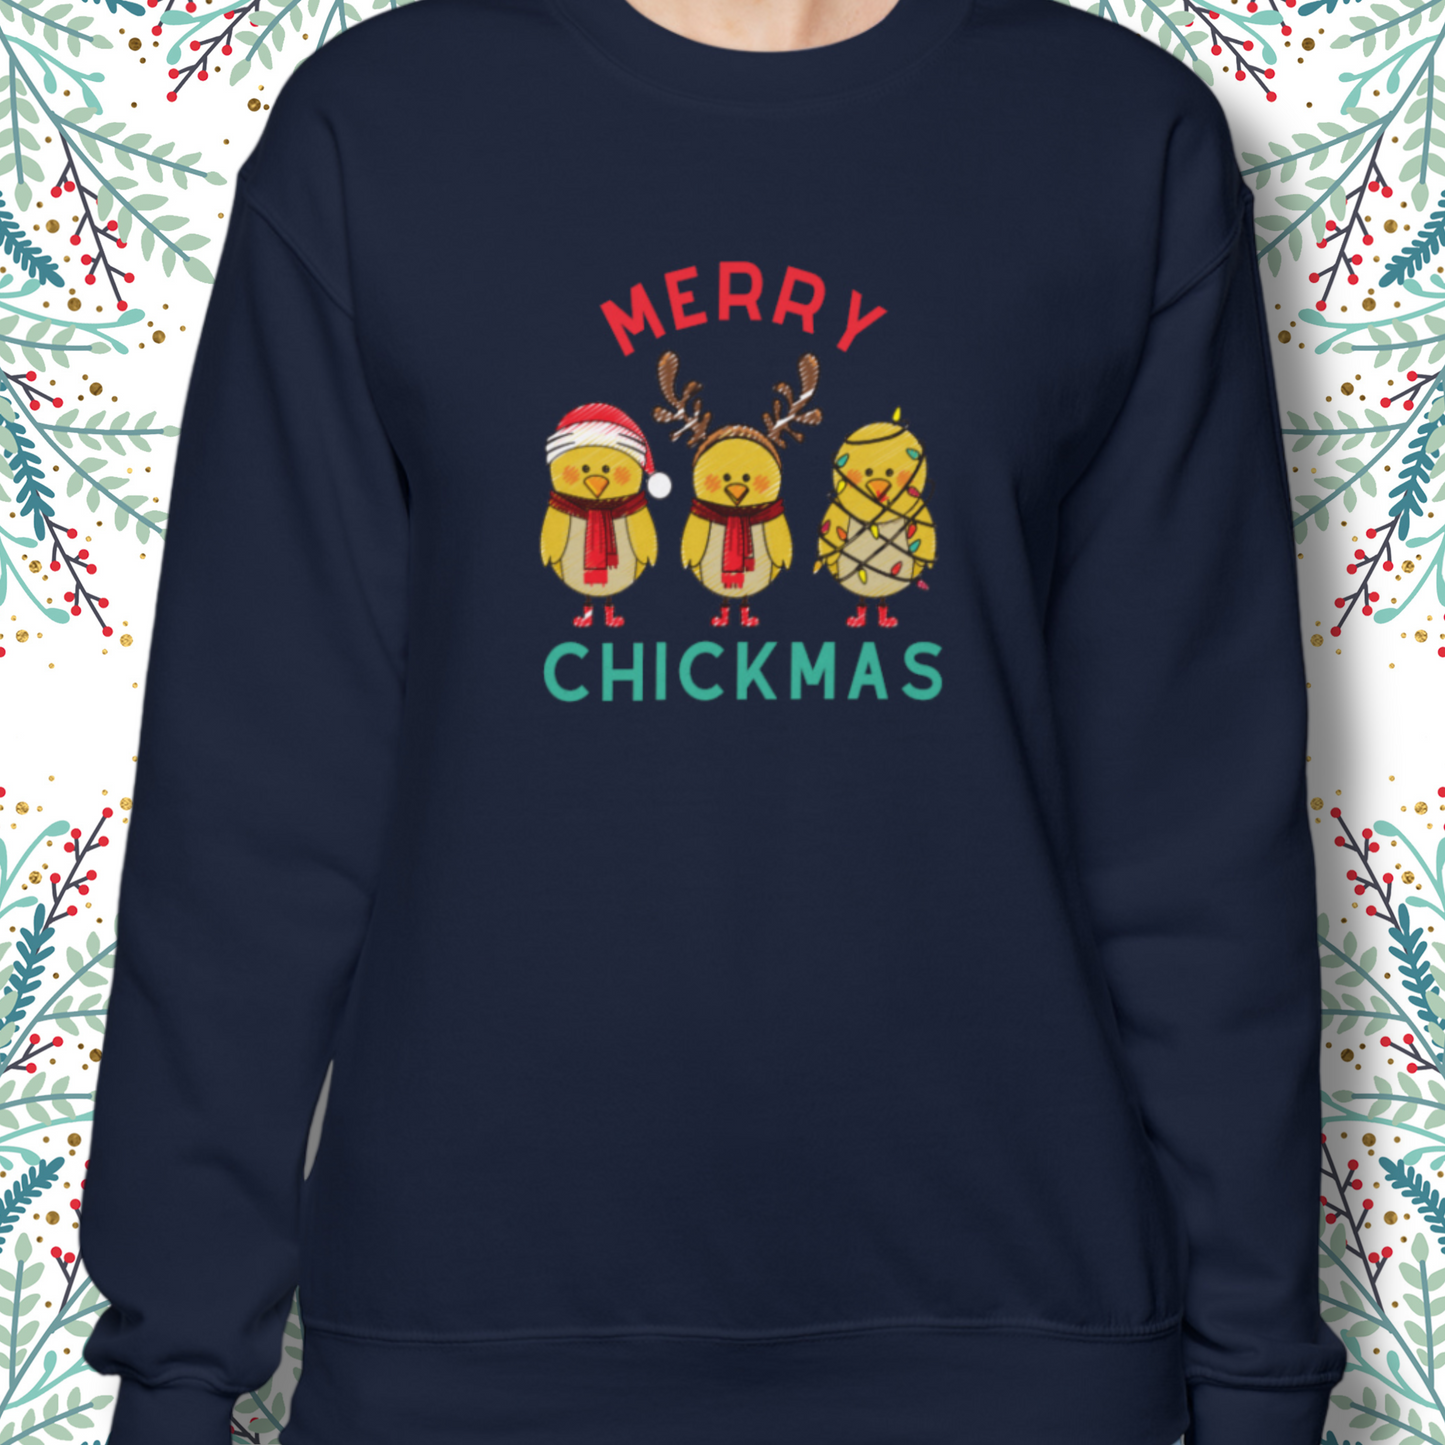 Merry Chickmas Extravaganza: Gildan Softstyle Crewneck – Three Clucky Companions in Festive Finery - Canadohta Custom Creations LLC